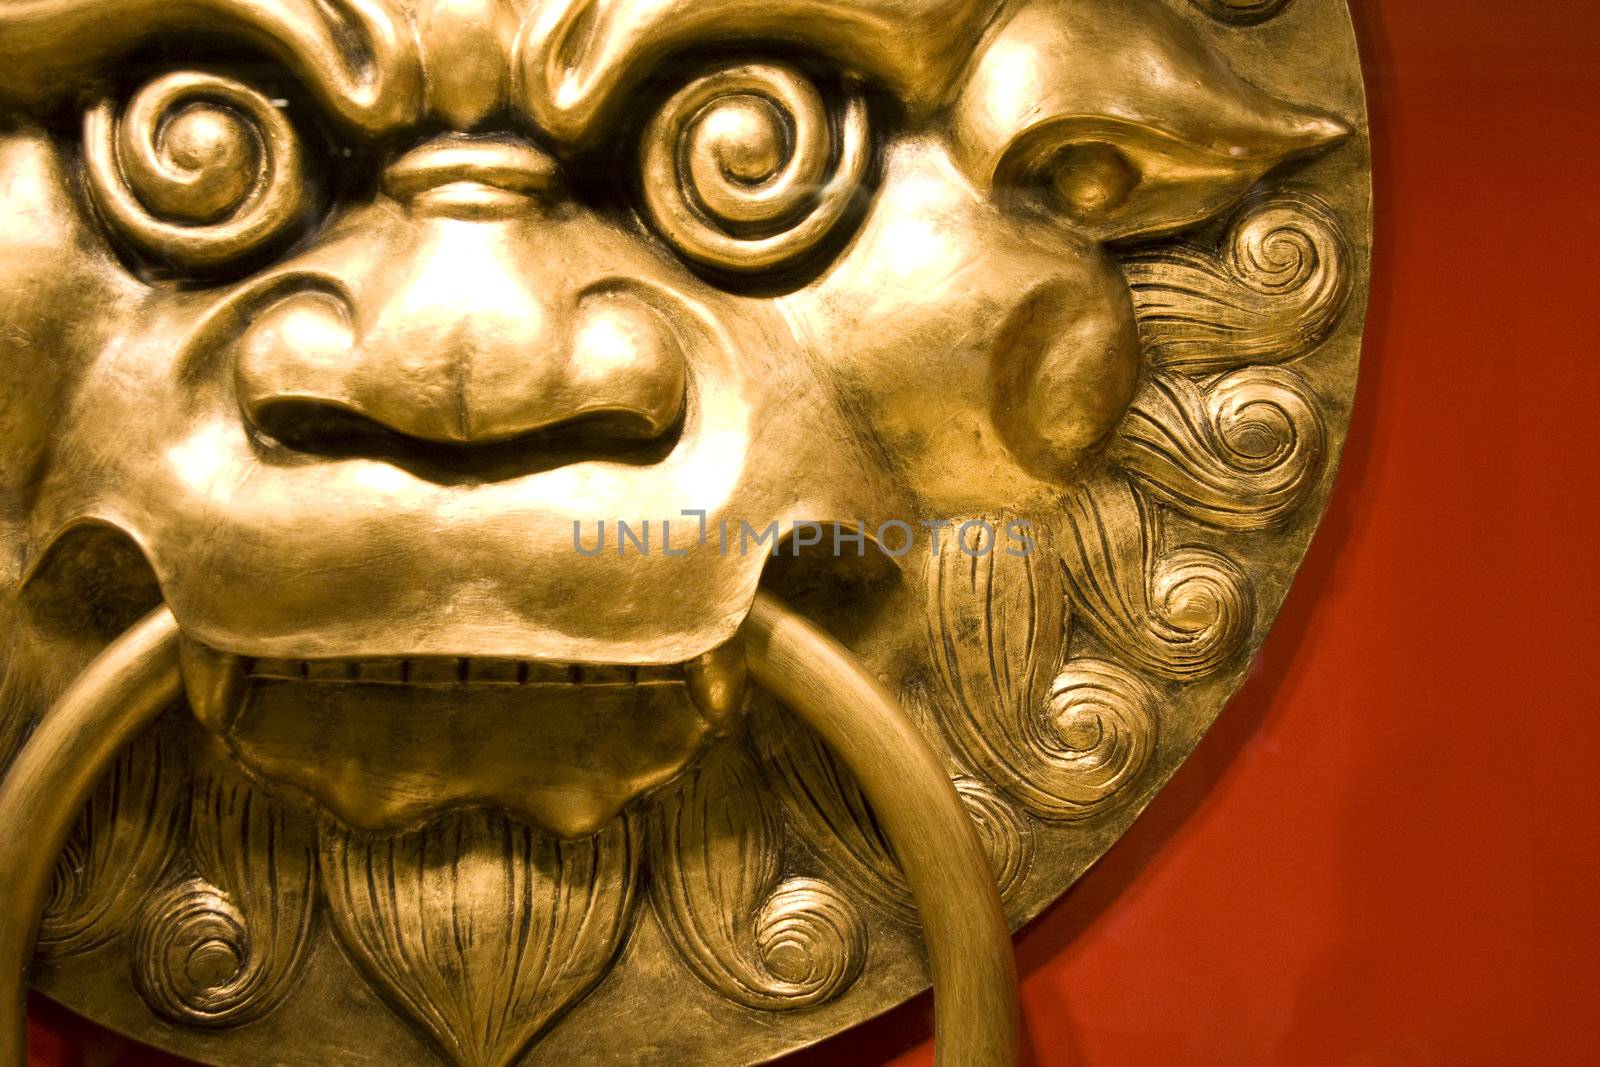 It is chinese style lionhead knocker door